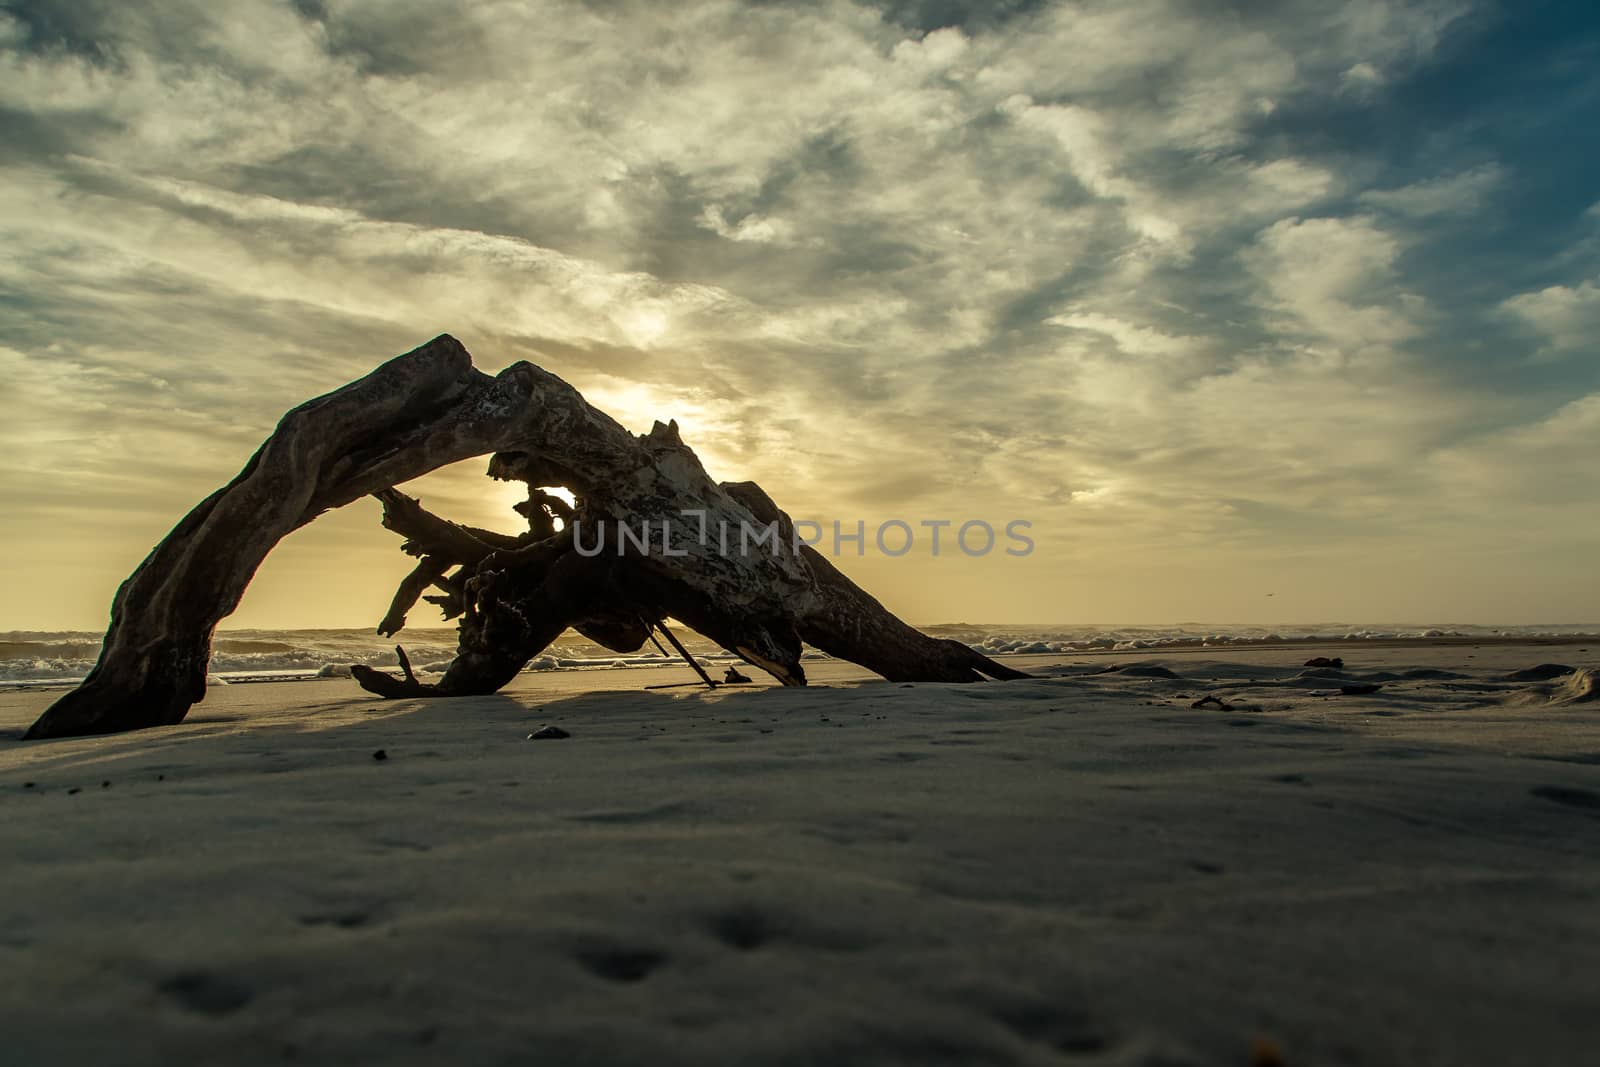 A large section of driftwood blocks the sunrise at Amelia Island, Florida.